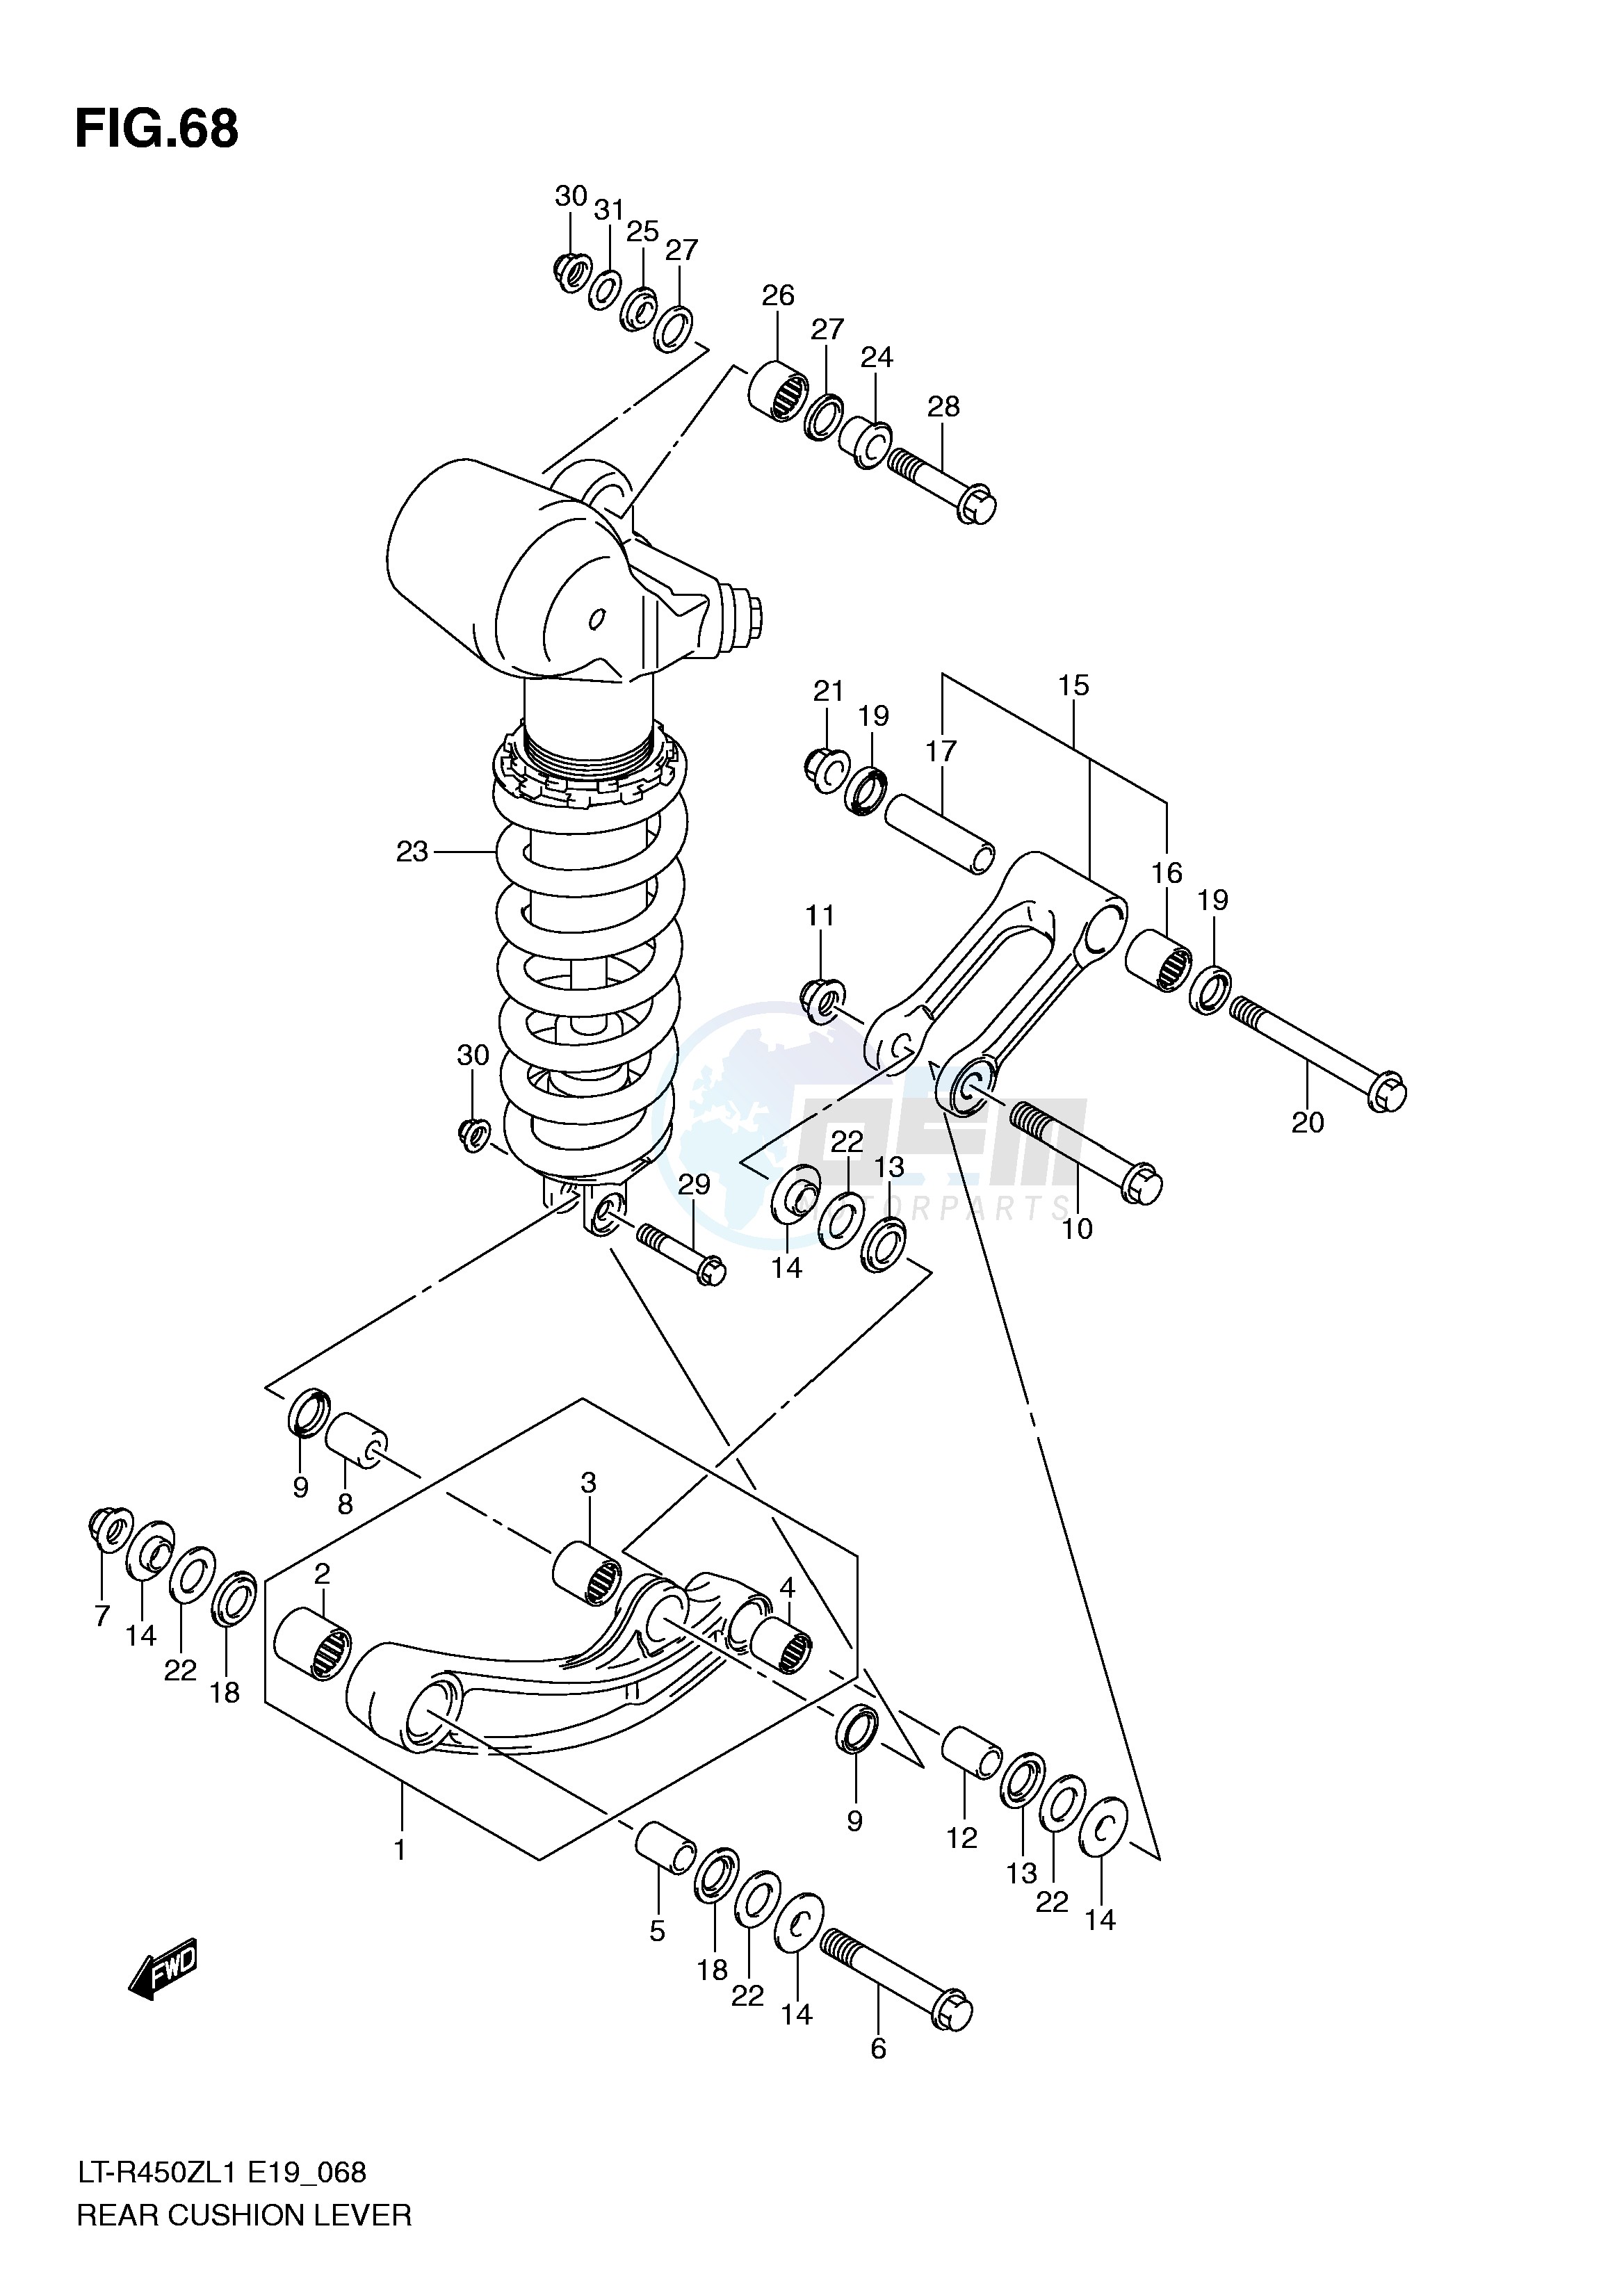 REAR CUSHION LEVER (LT-R450ZL1 E19) blueprint